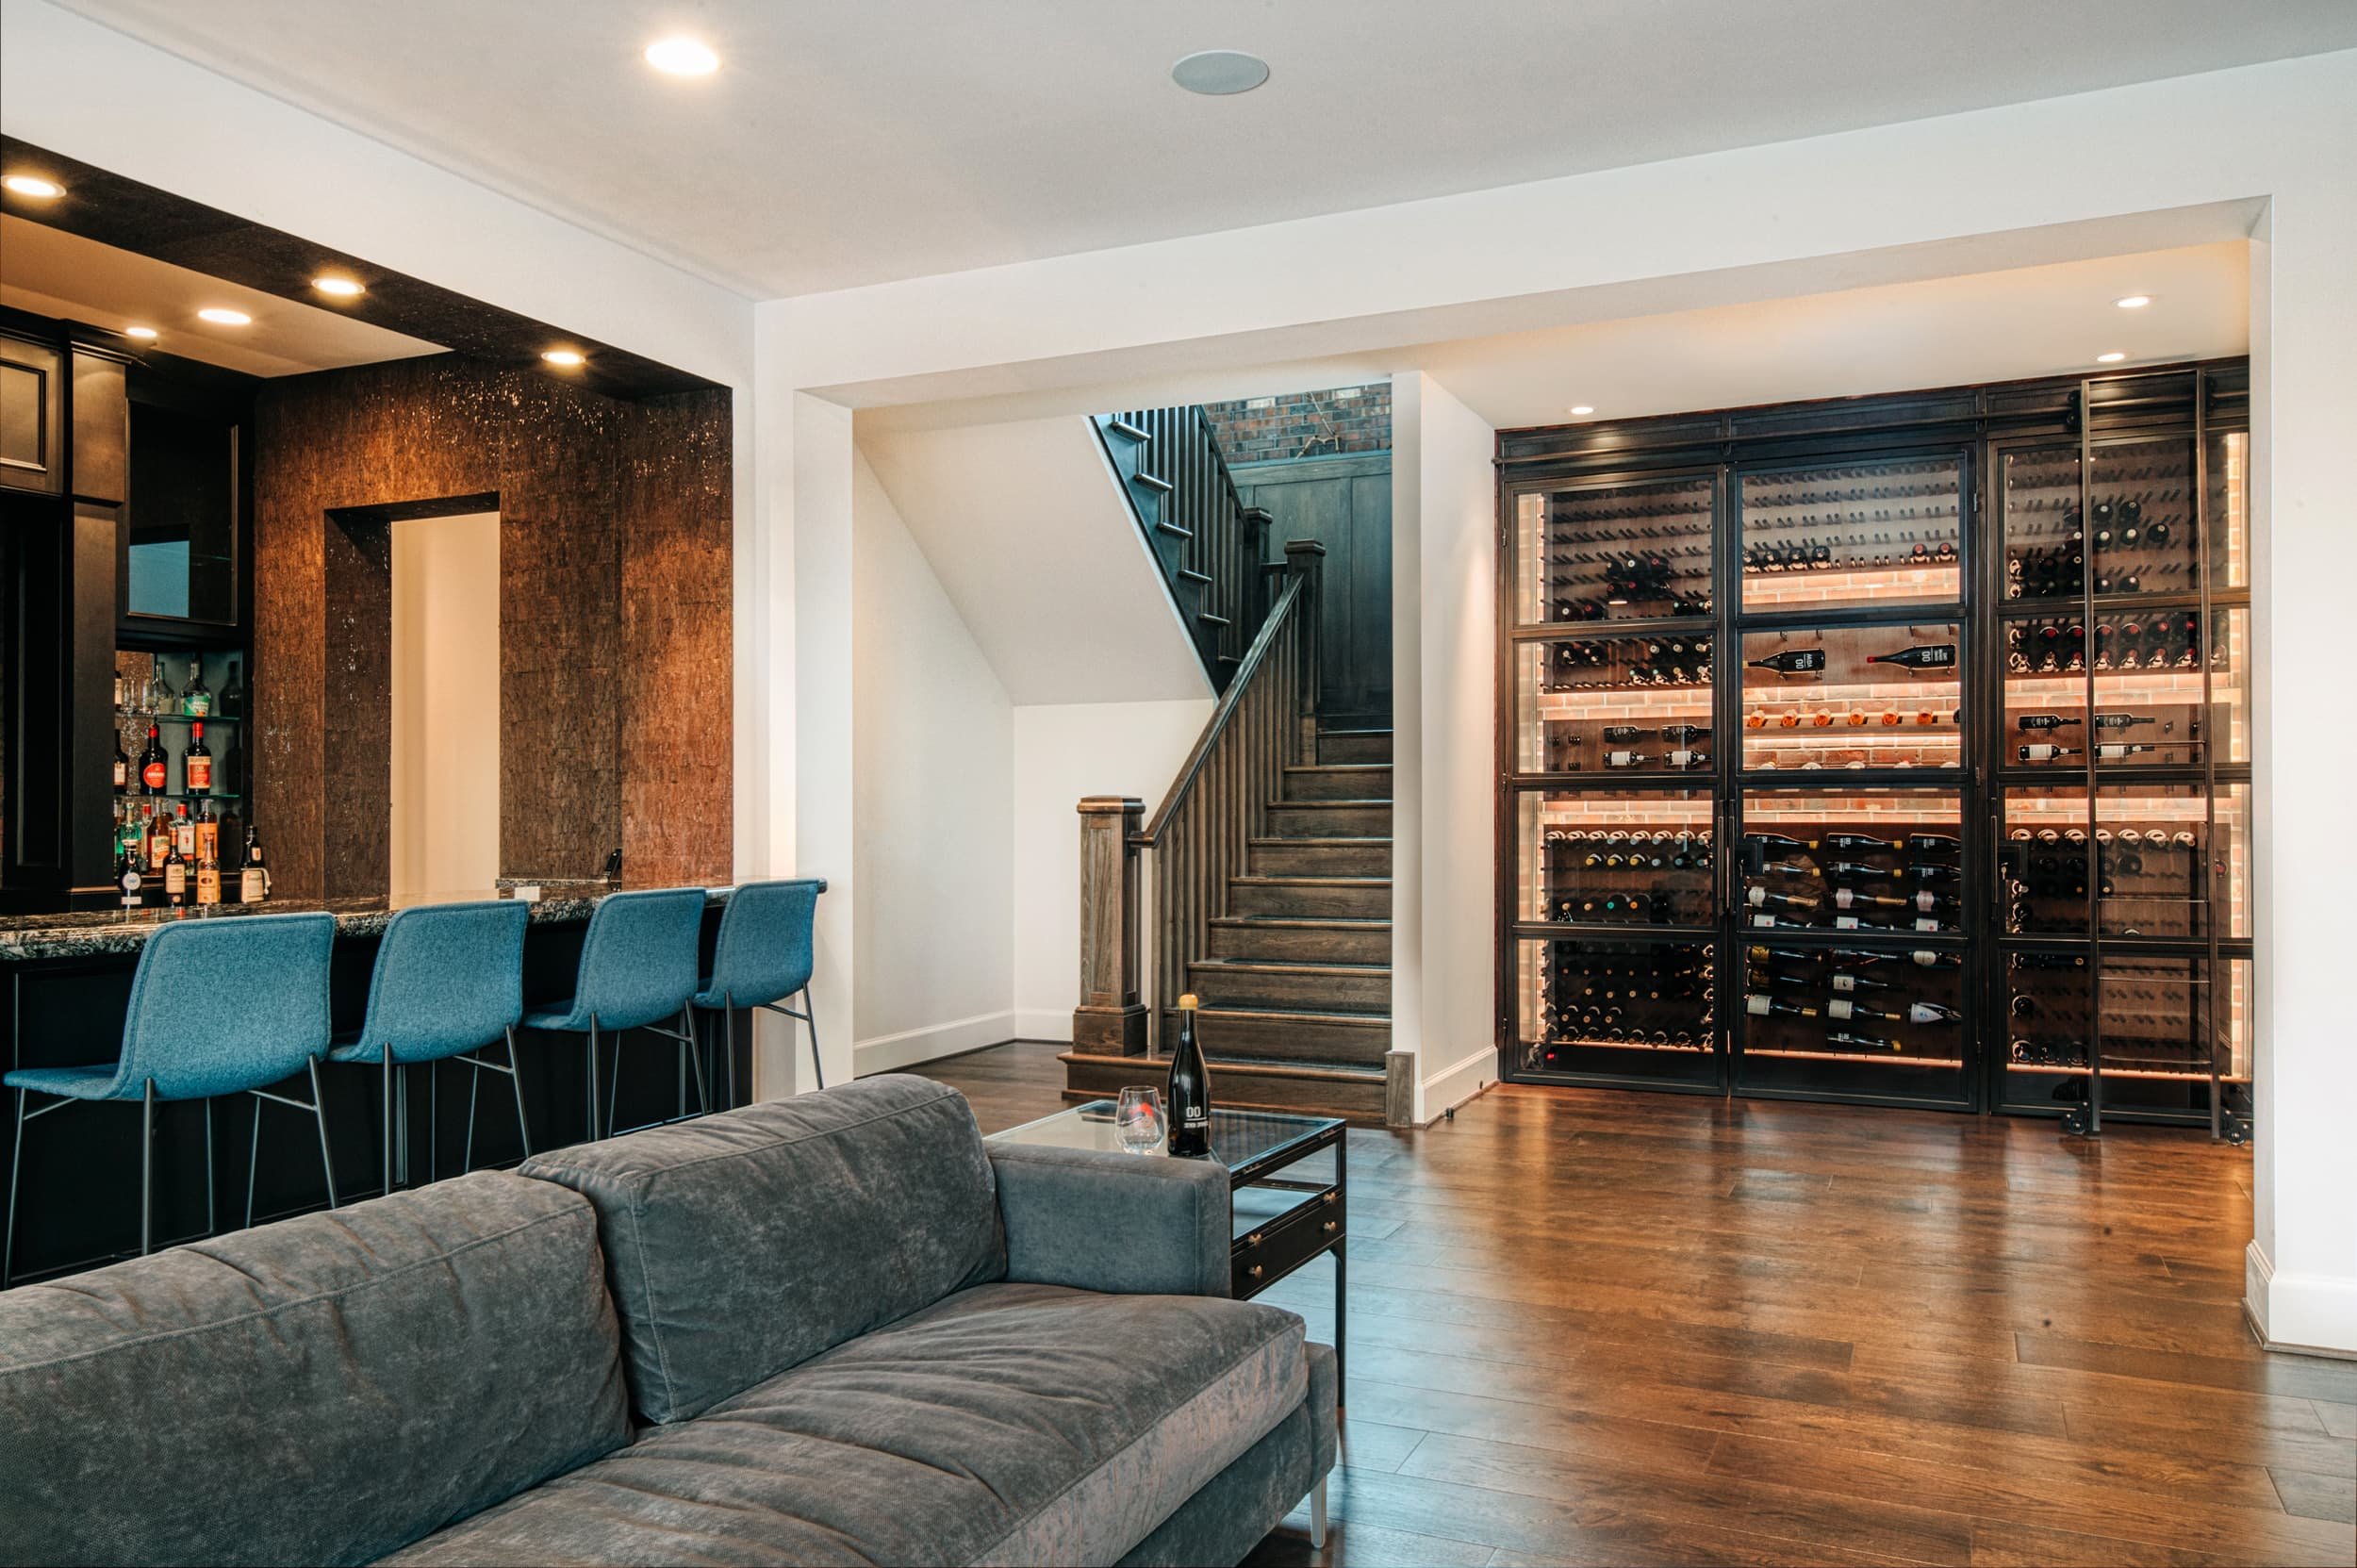 Sommi Wine Cellars - Custom Home Wine Cellar Design & Build in Camas Washington